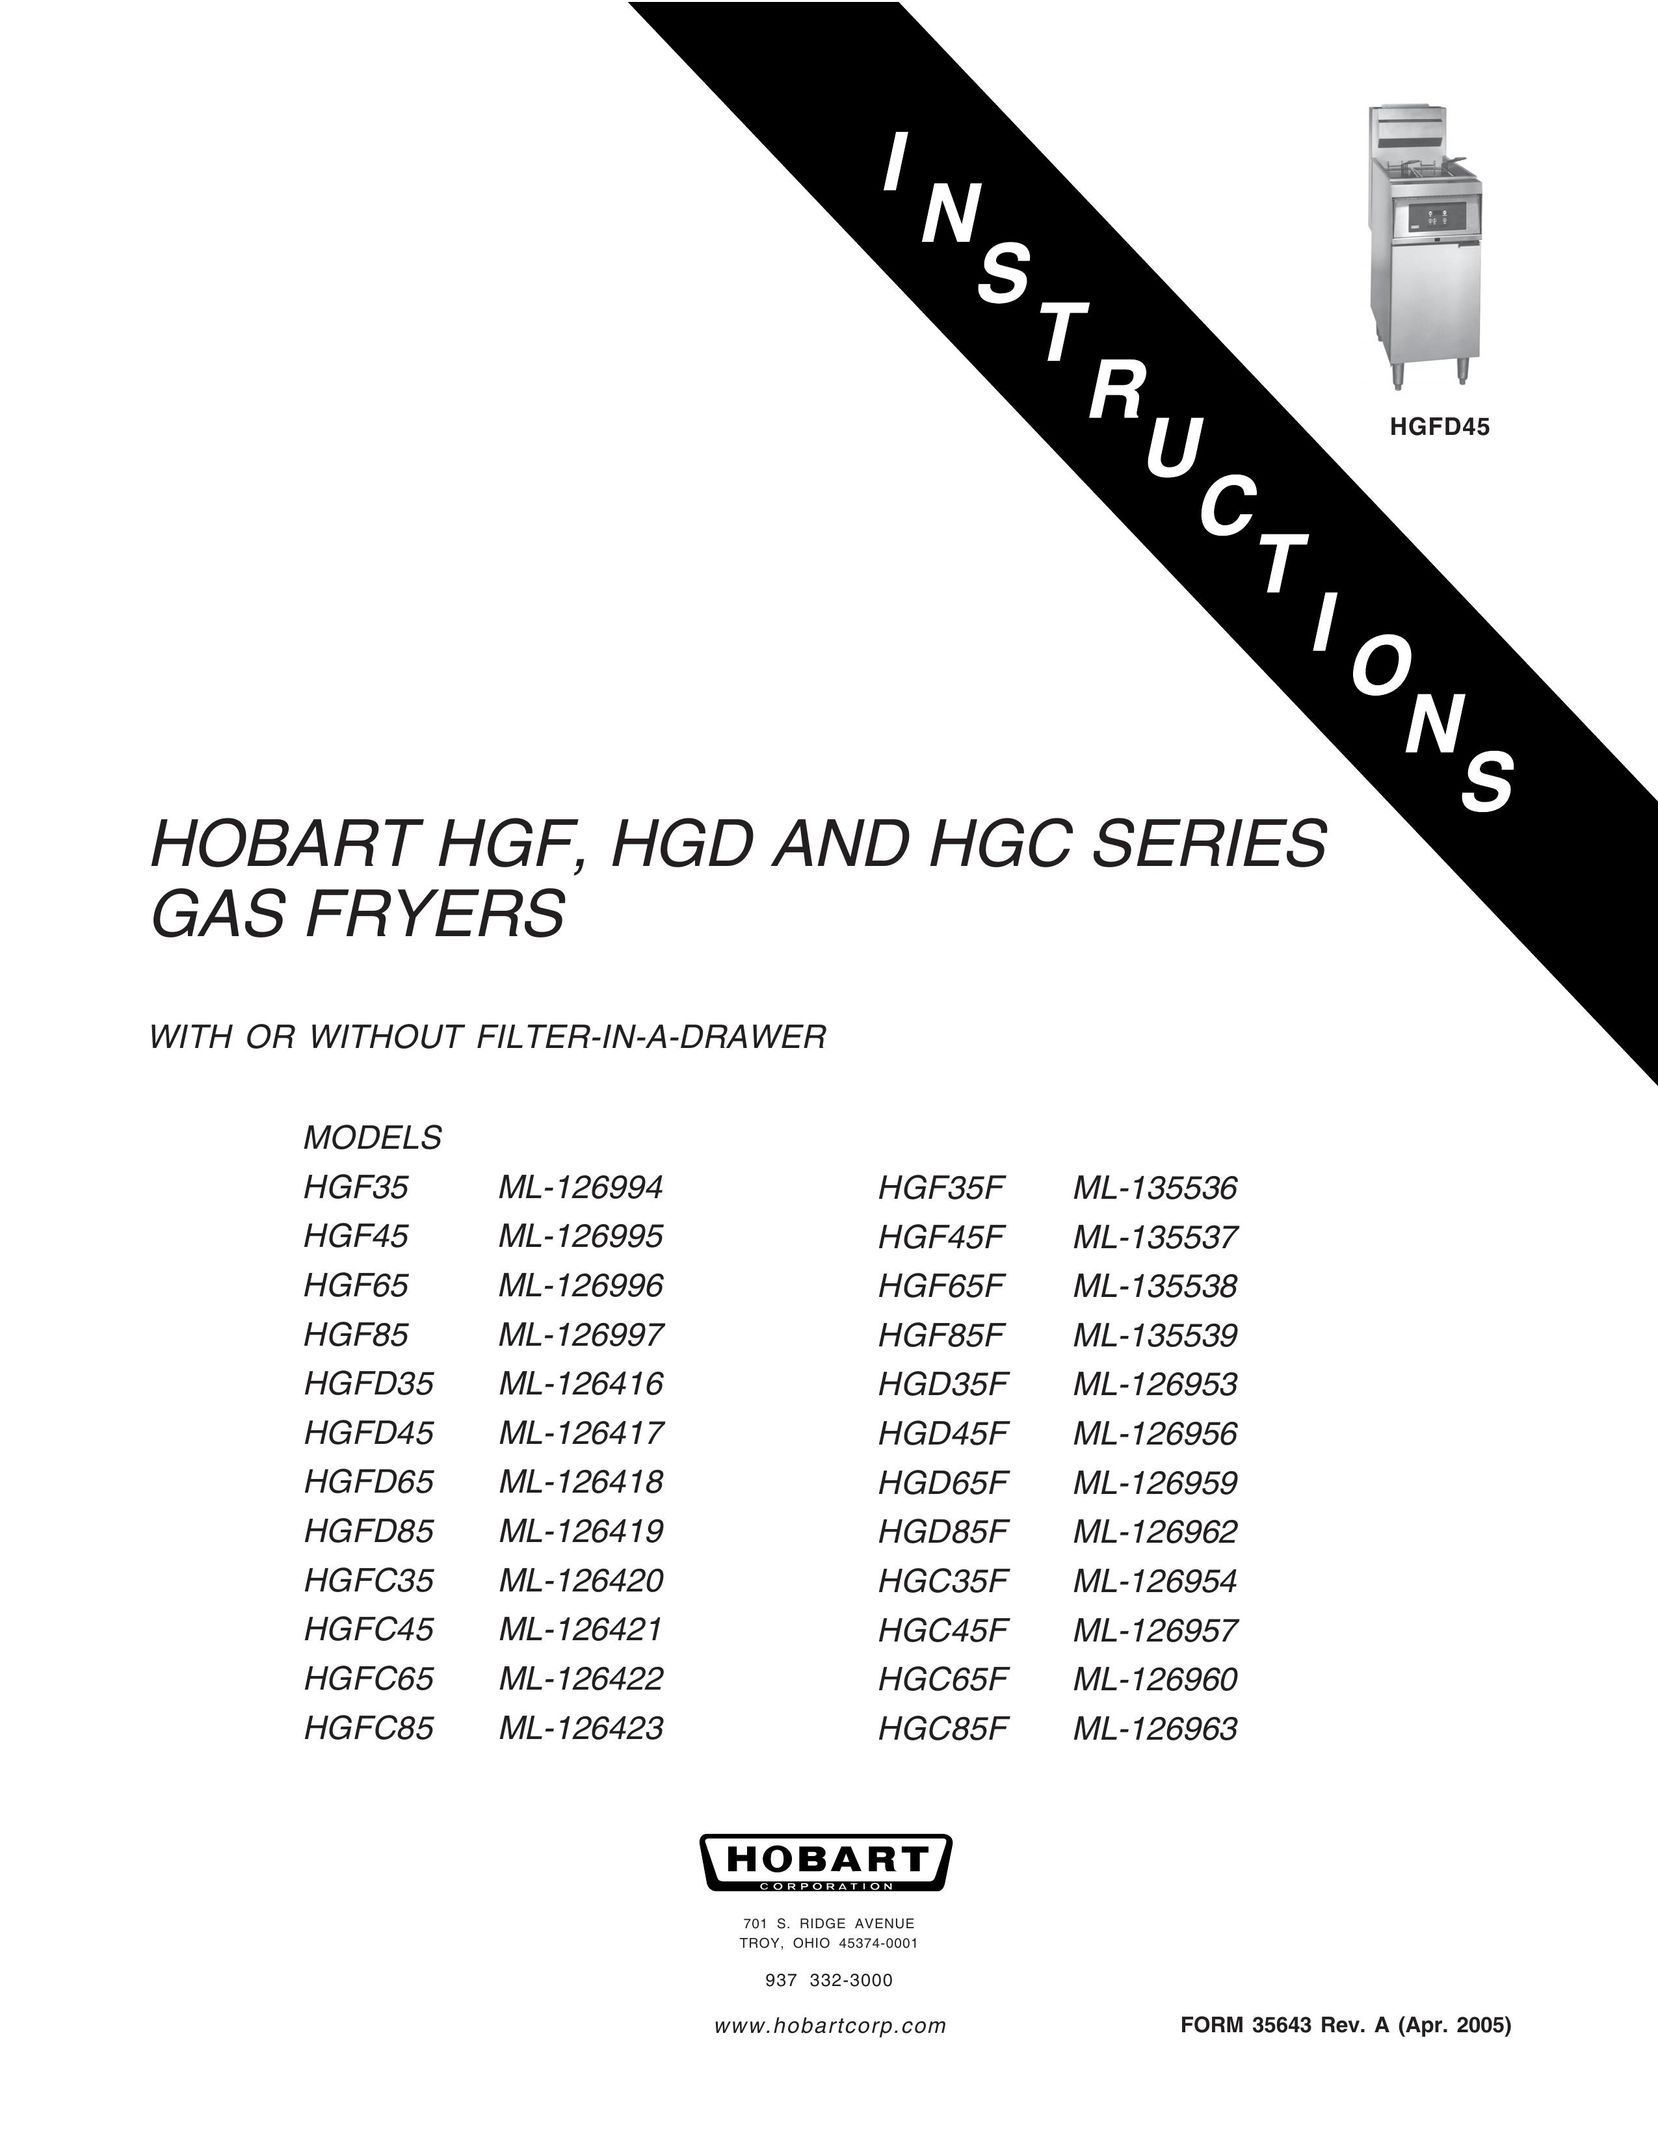 Hobart HGD35F ML-126953 Fryer User Manual